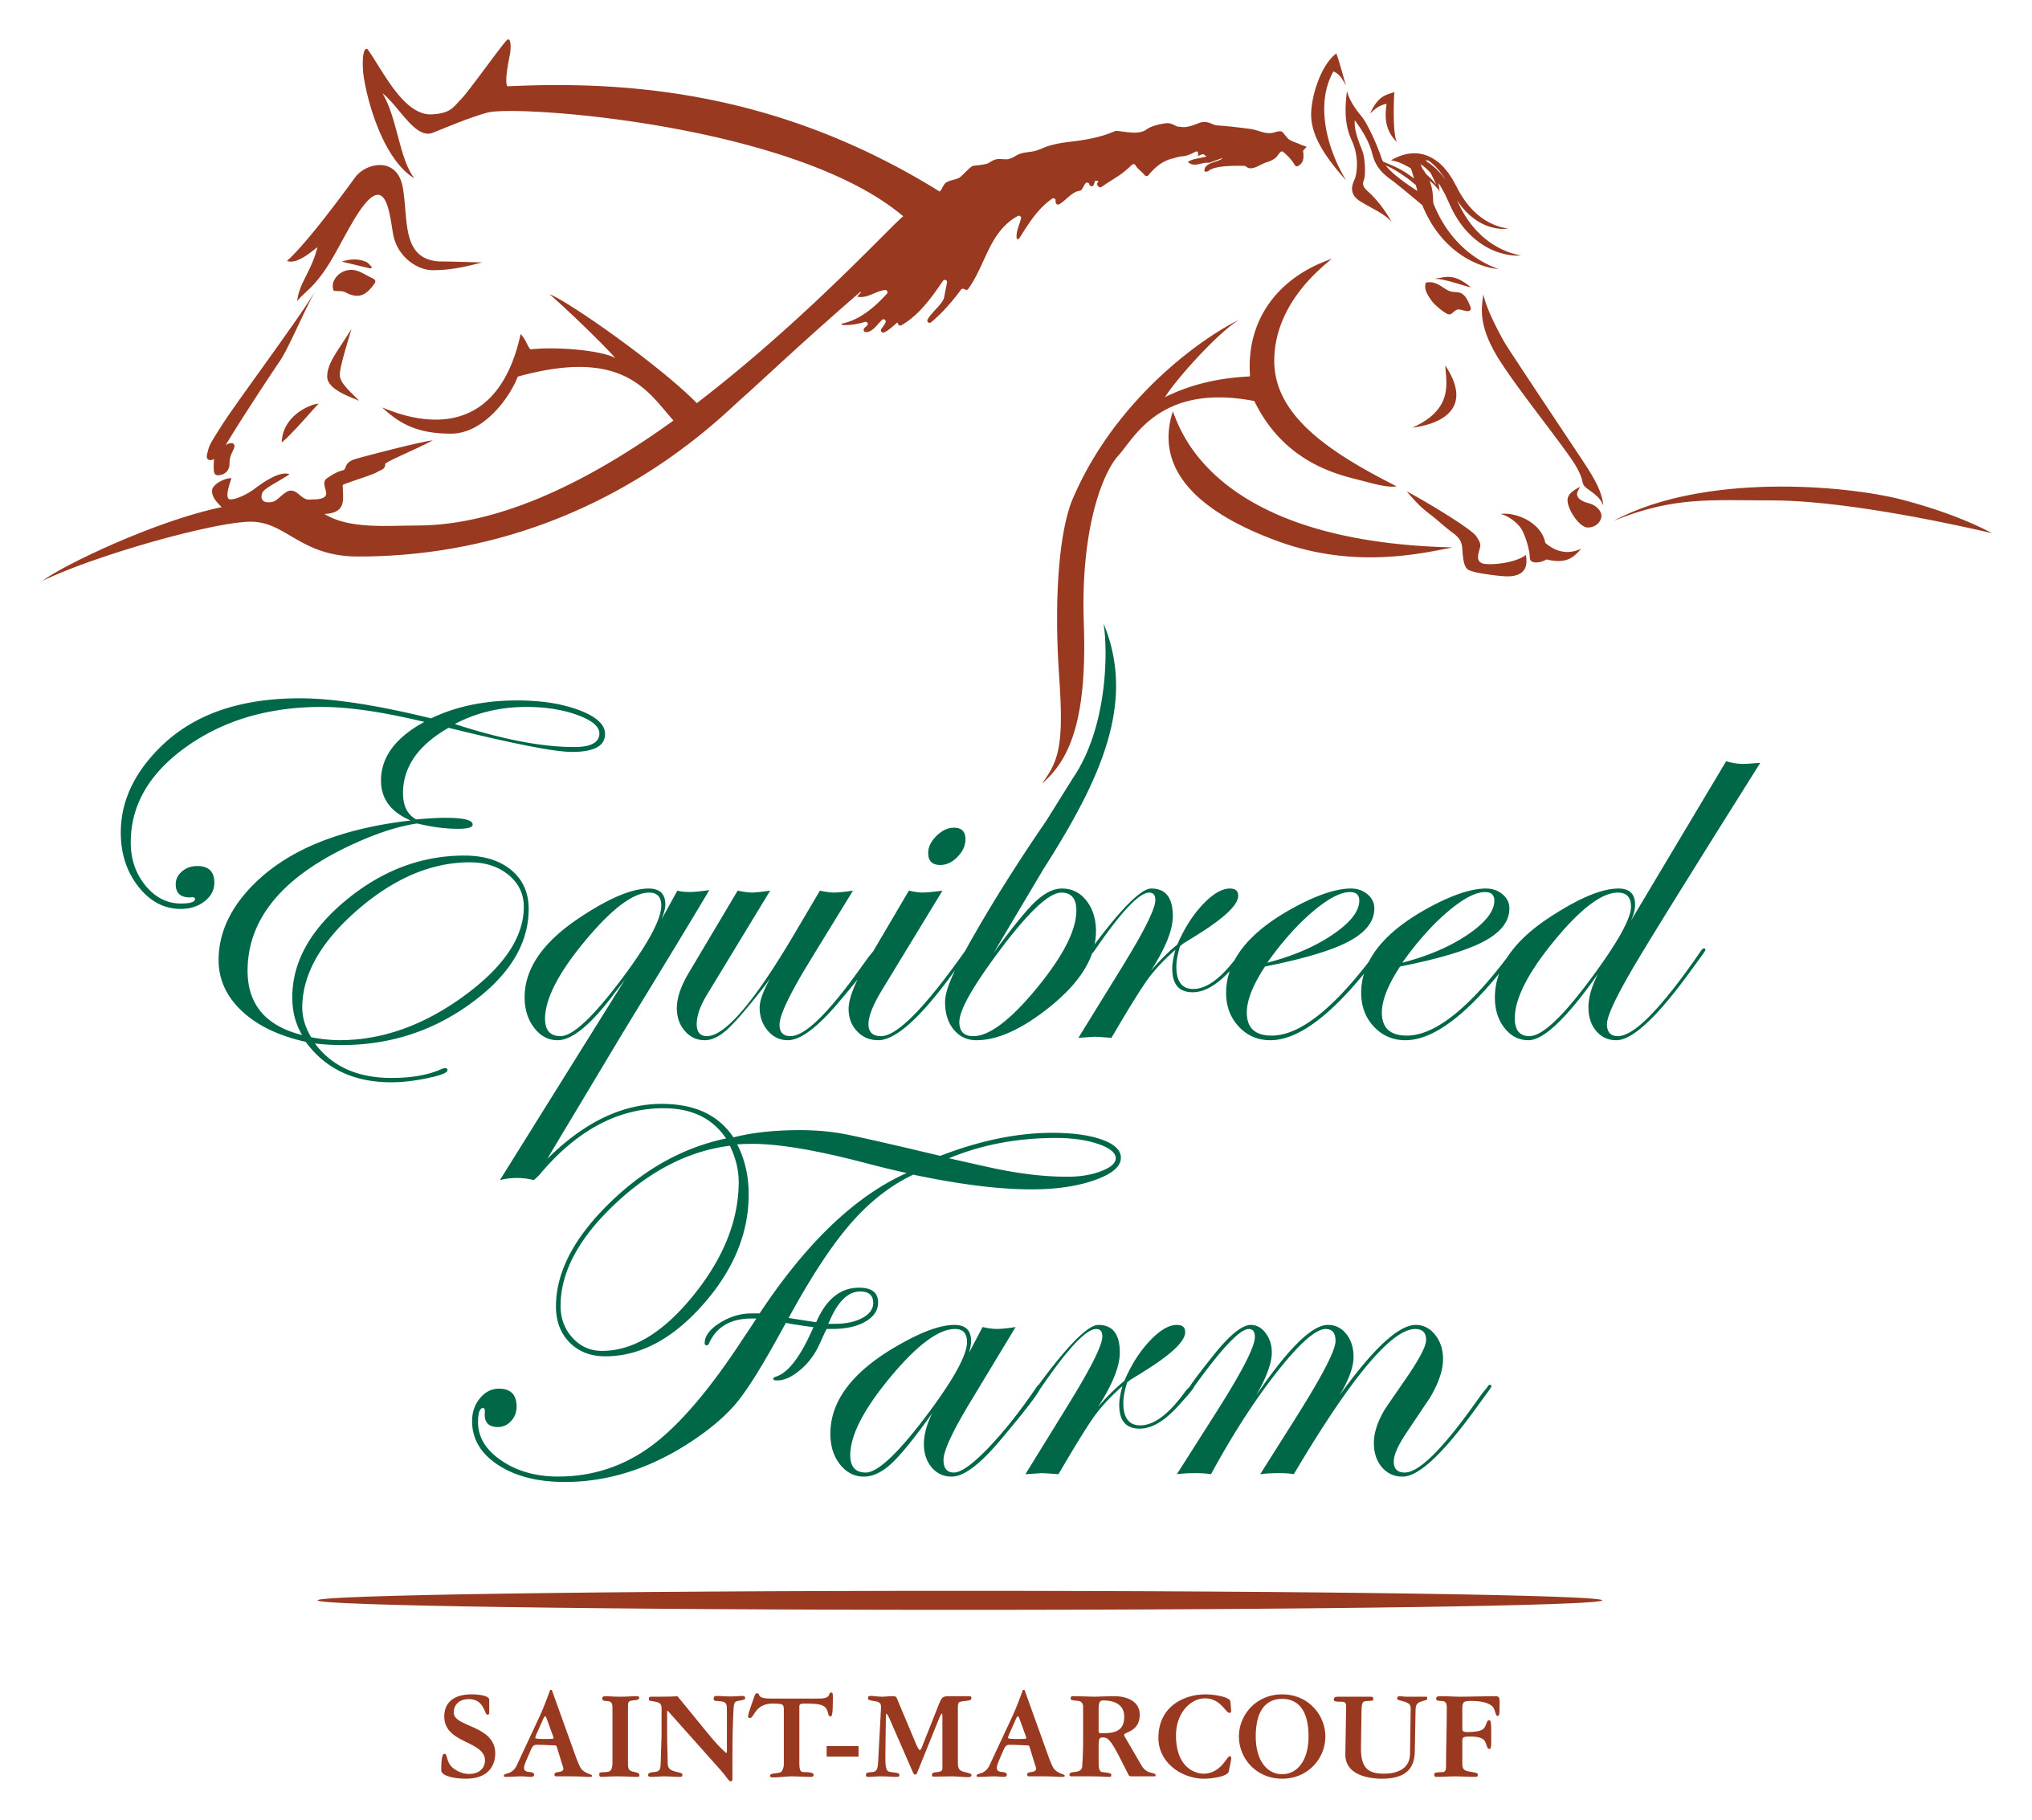 Equibreed Farm logo